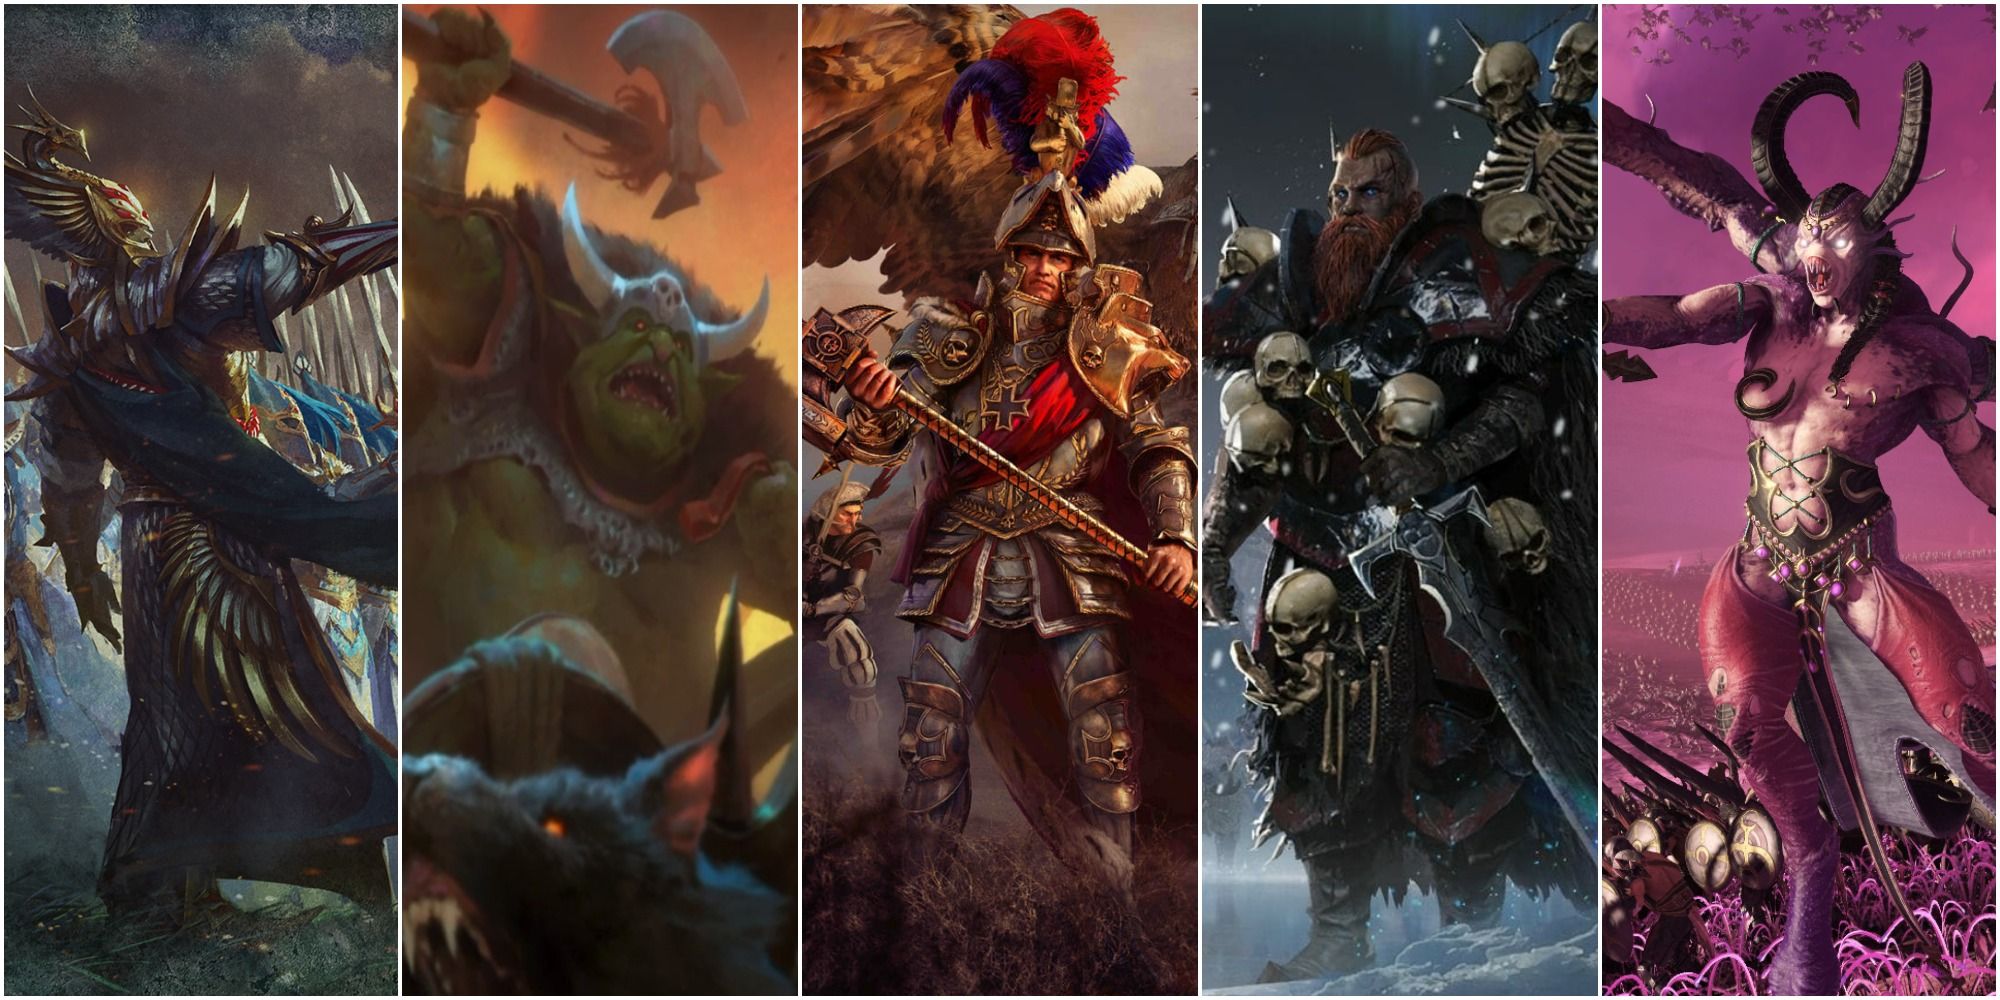 Warhammer Total War Featured Image showing Tyrion, Grom, Karl, Wulfrik and Slaanesh